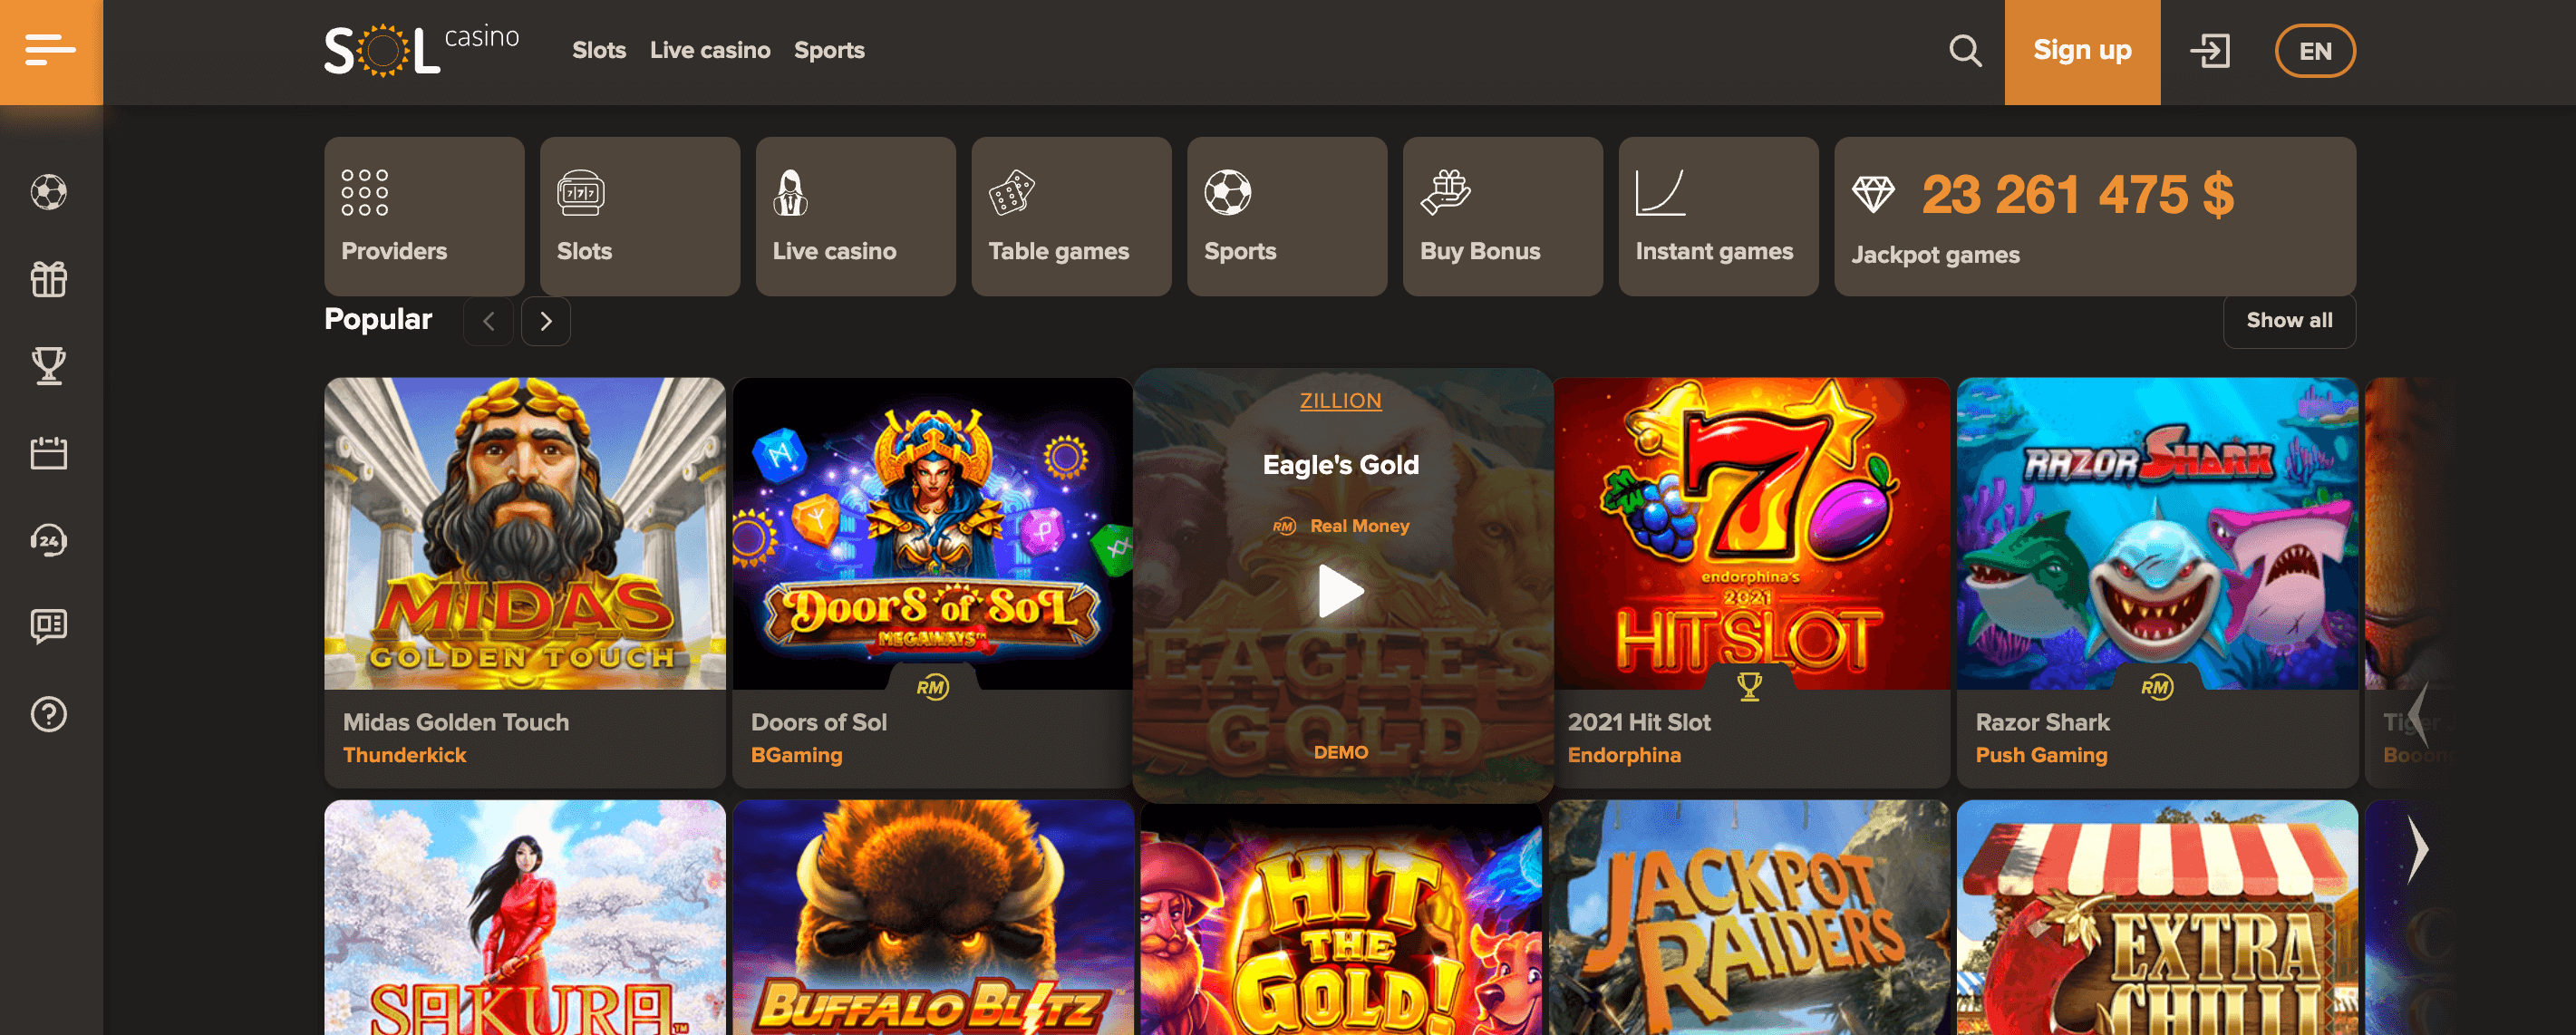 sol casino screenshot bitcoinfy